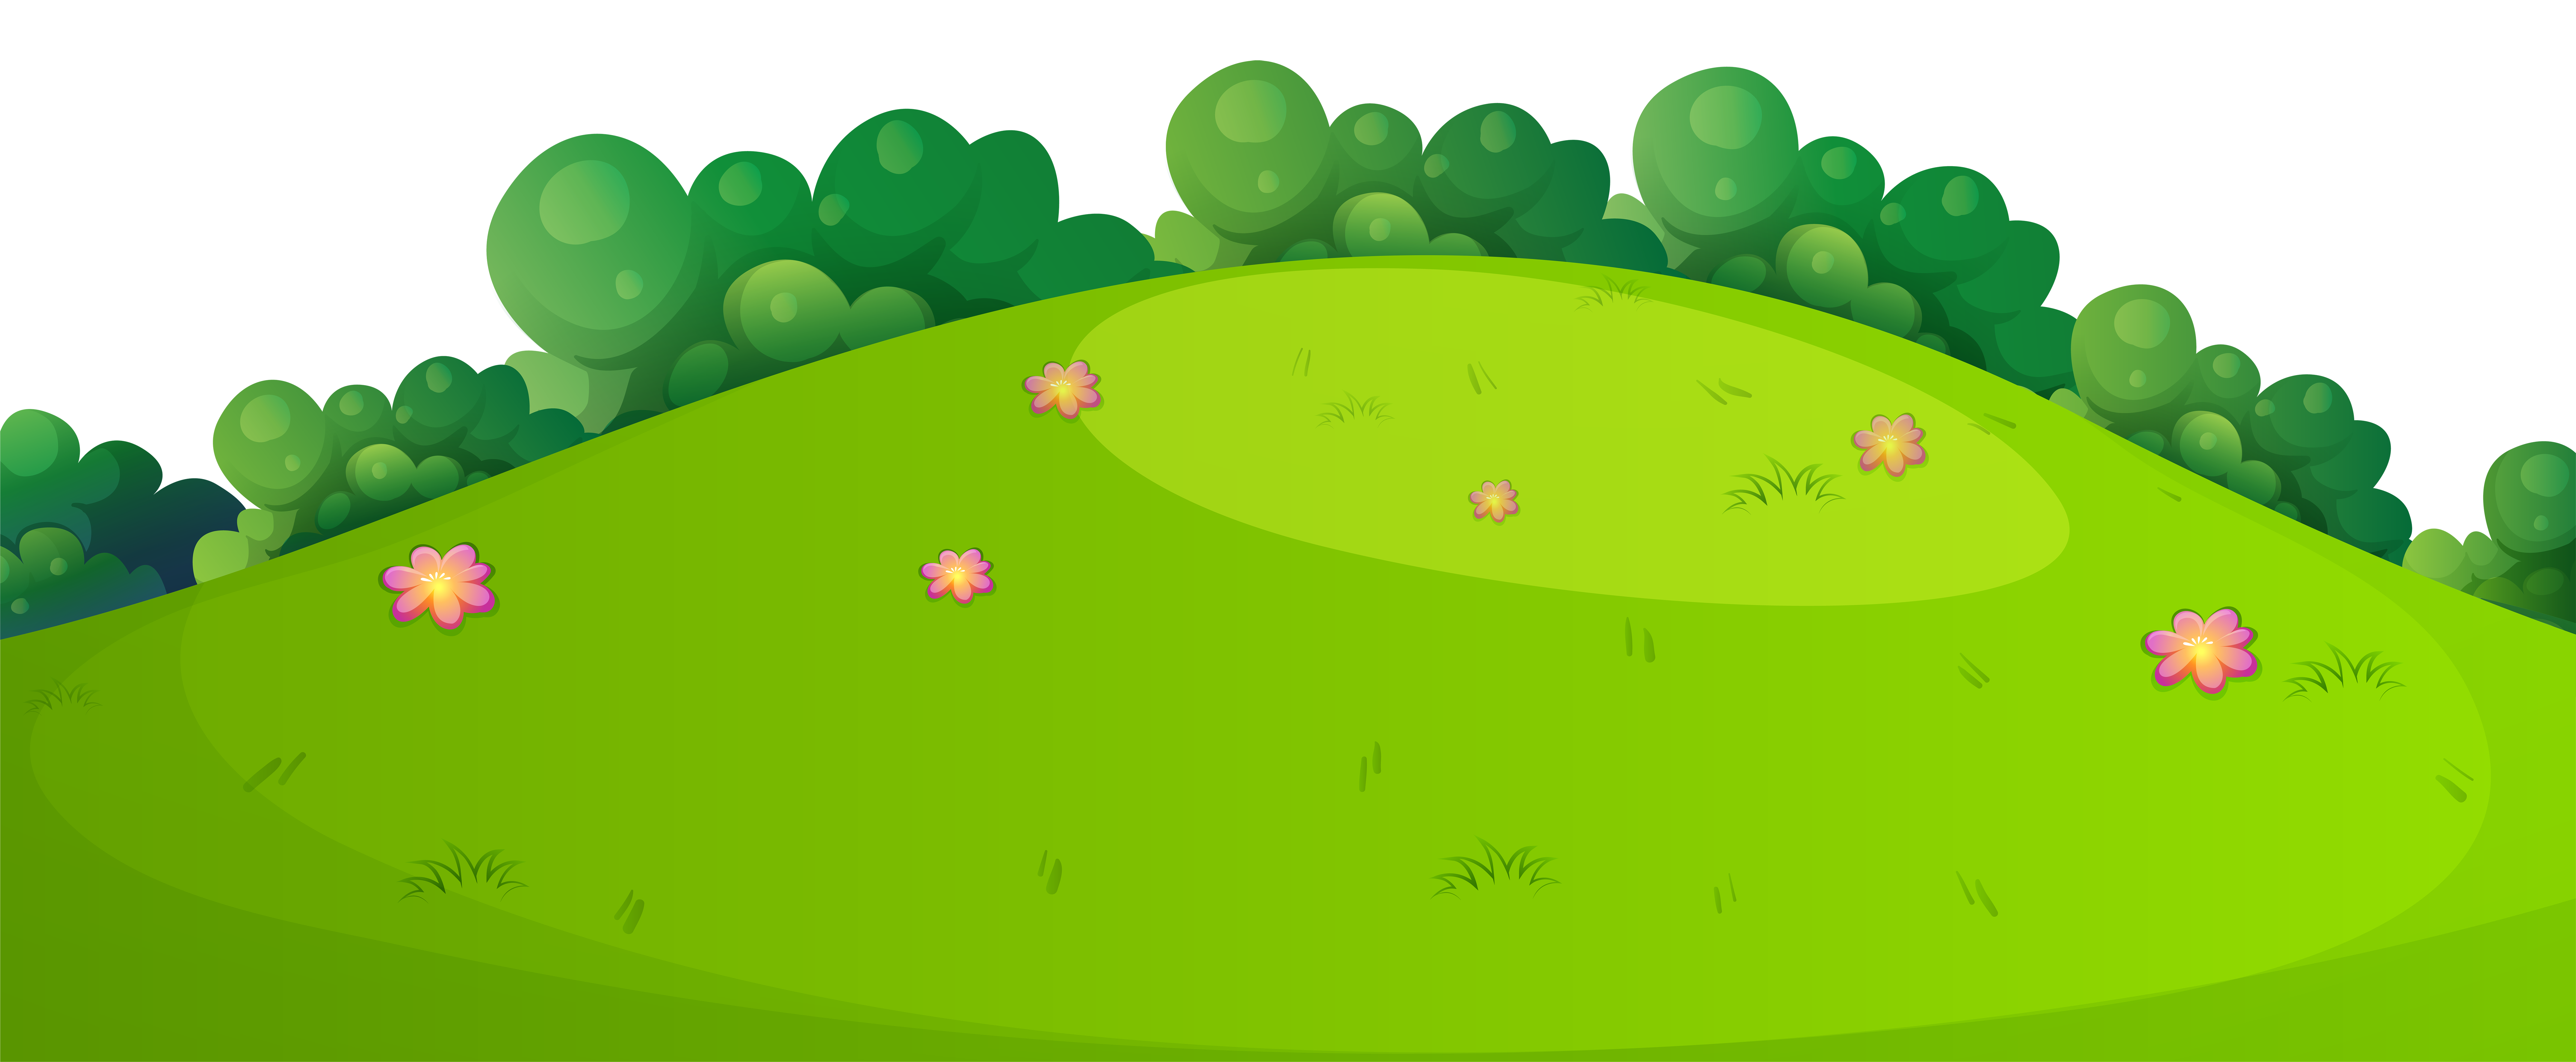 grass clipart ground